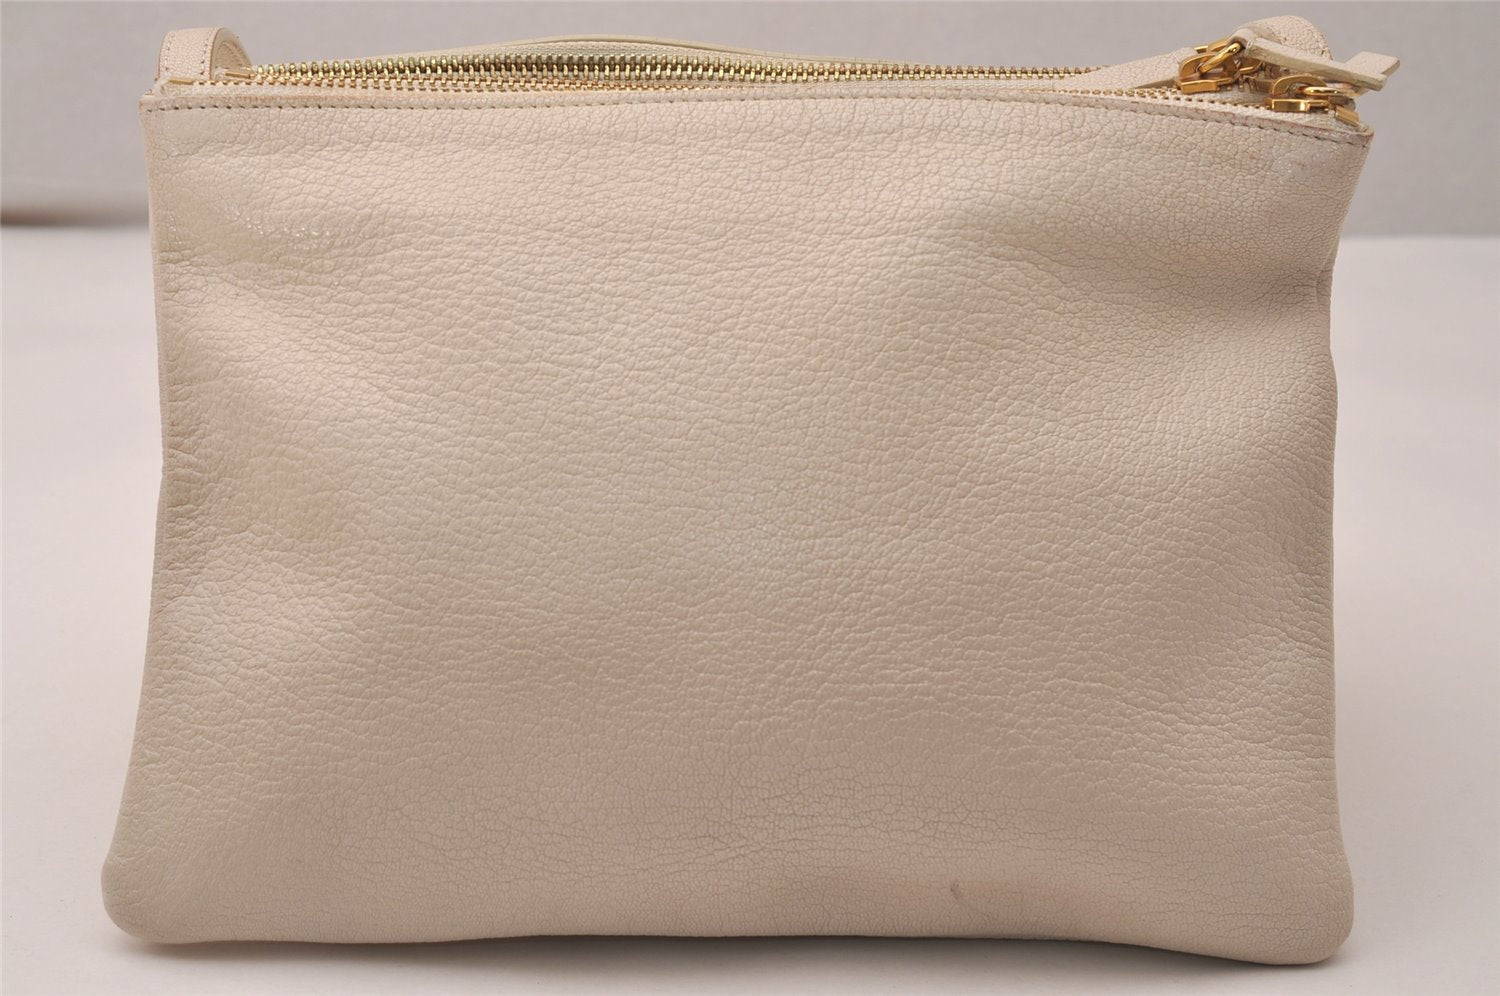 Authentic CELINE TRIO Shoulder Cross Body Clutch Bag Purse Leather White 7722J